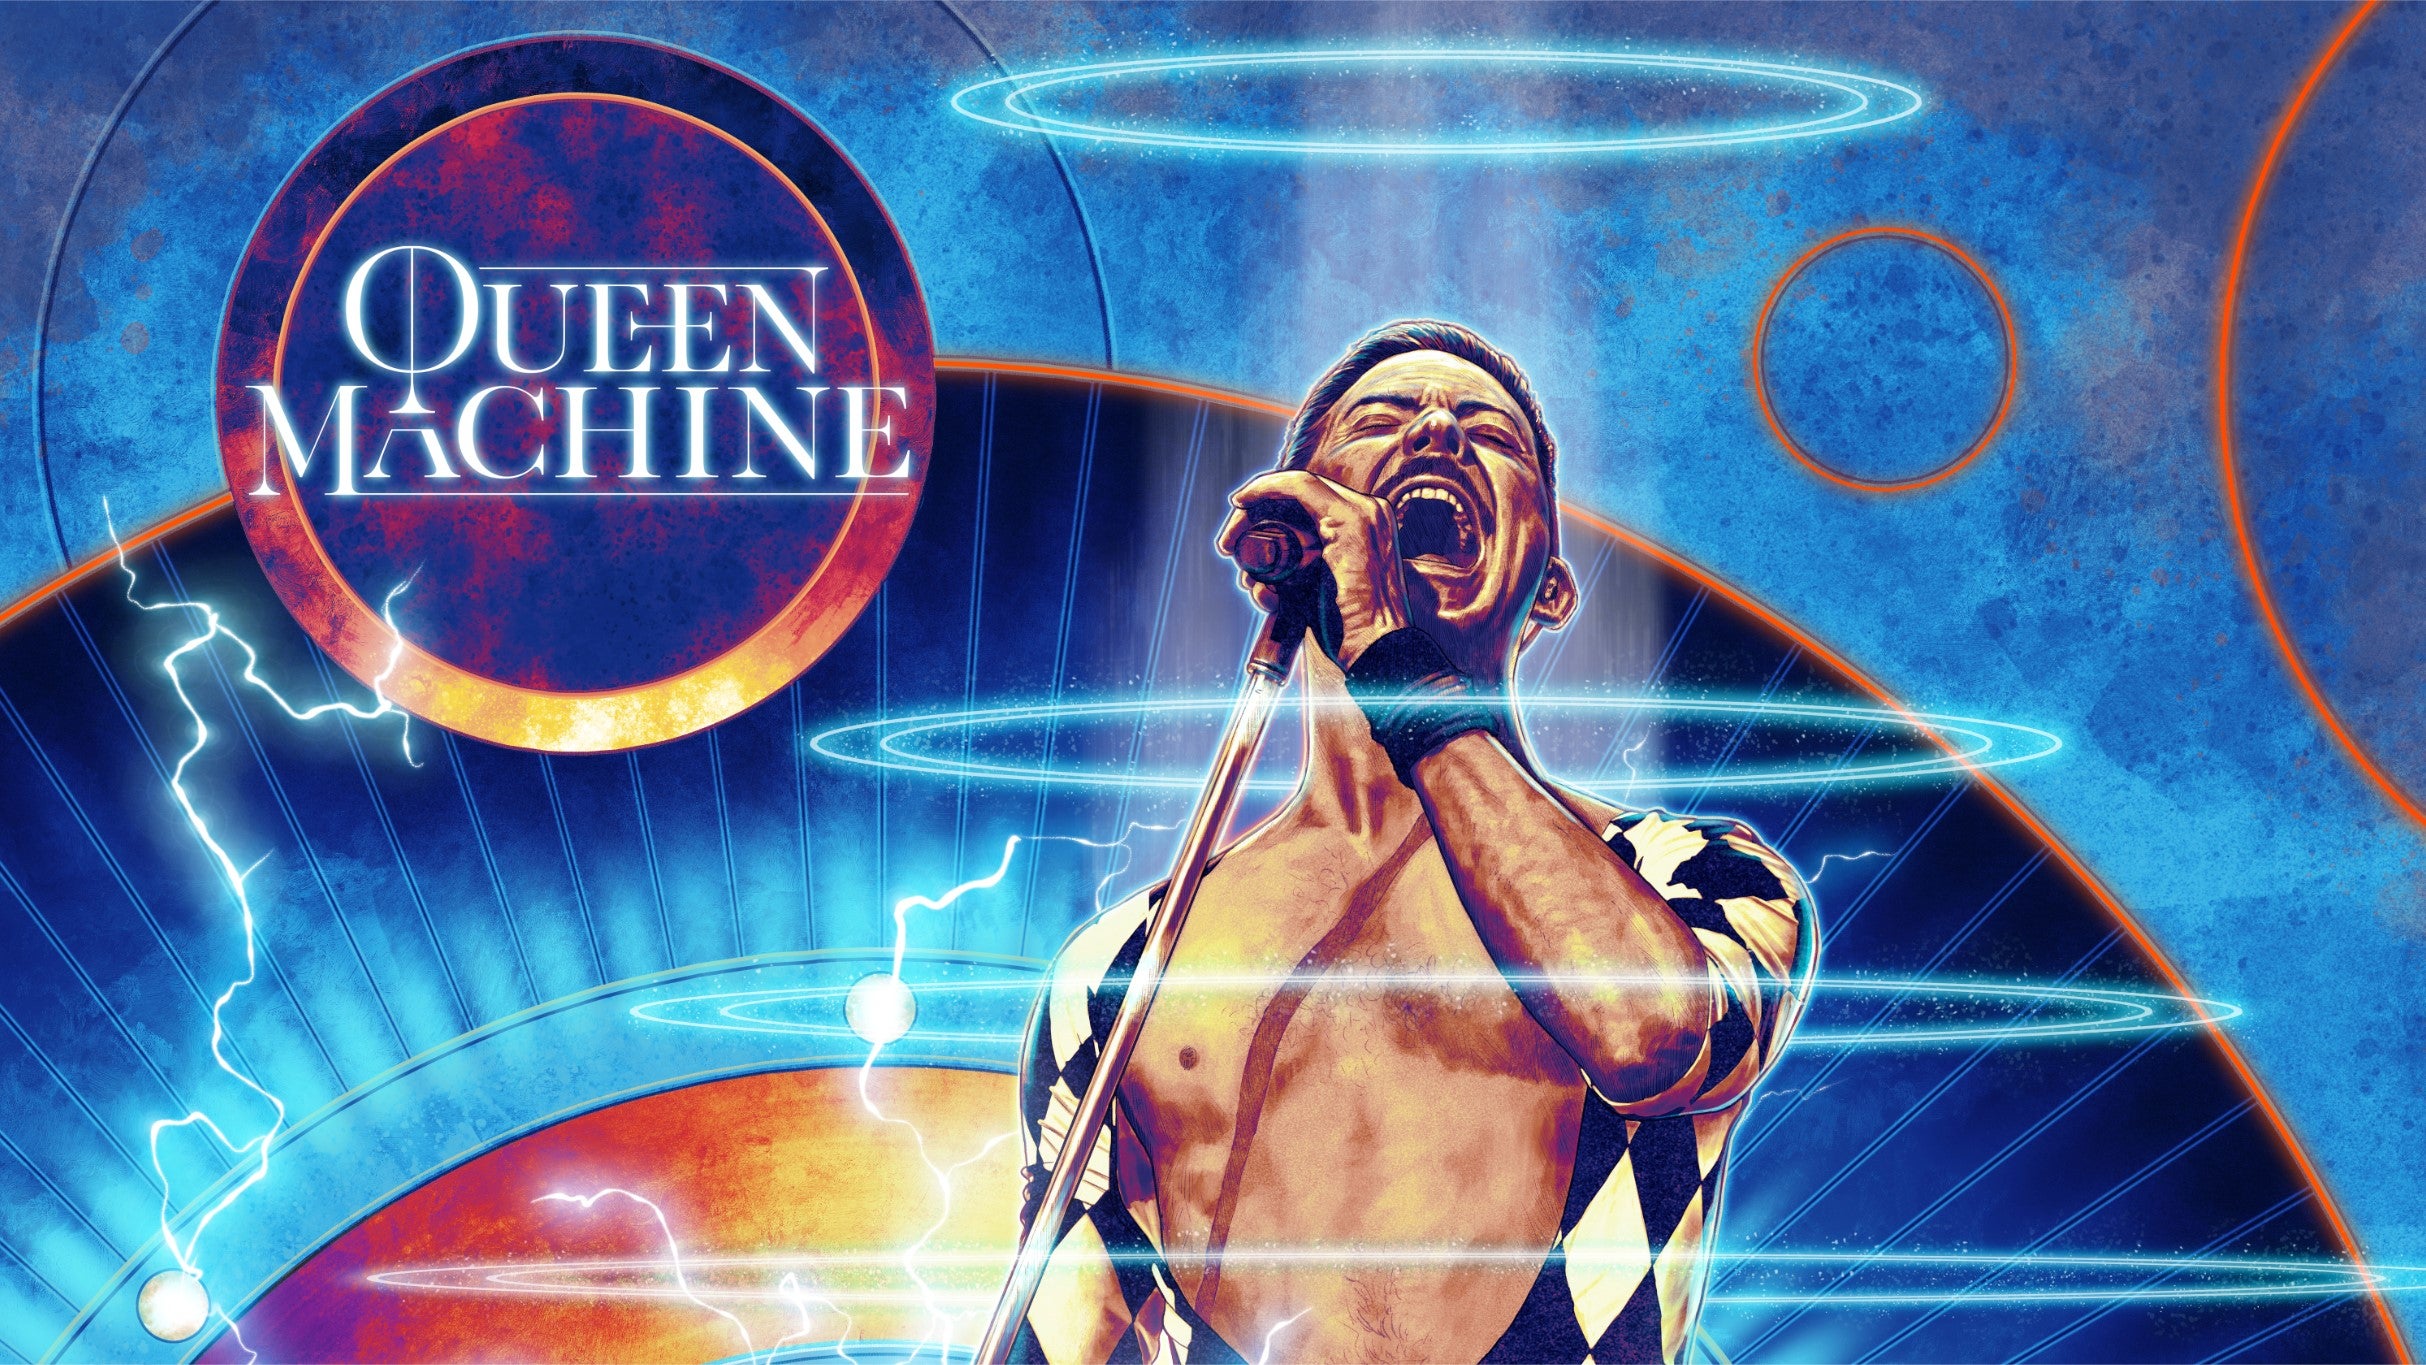 Queen Machine in Waukegan promo photo for Ticketmaster Internet presale offer code